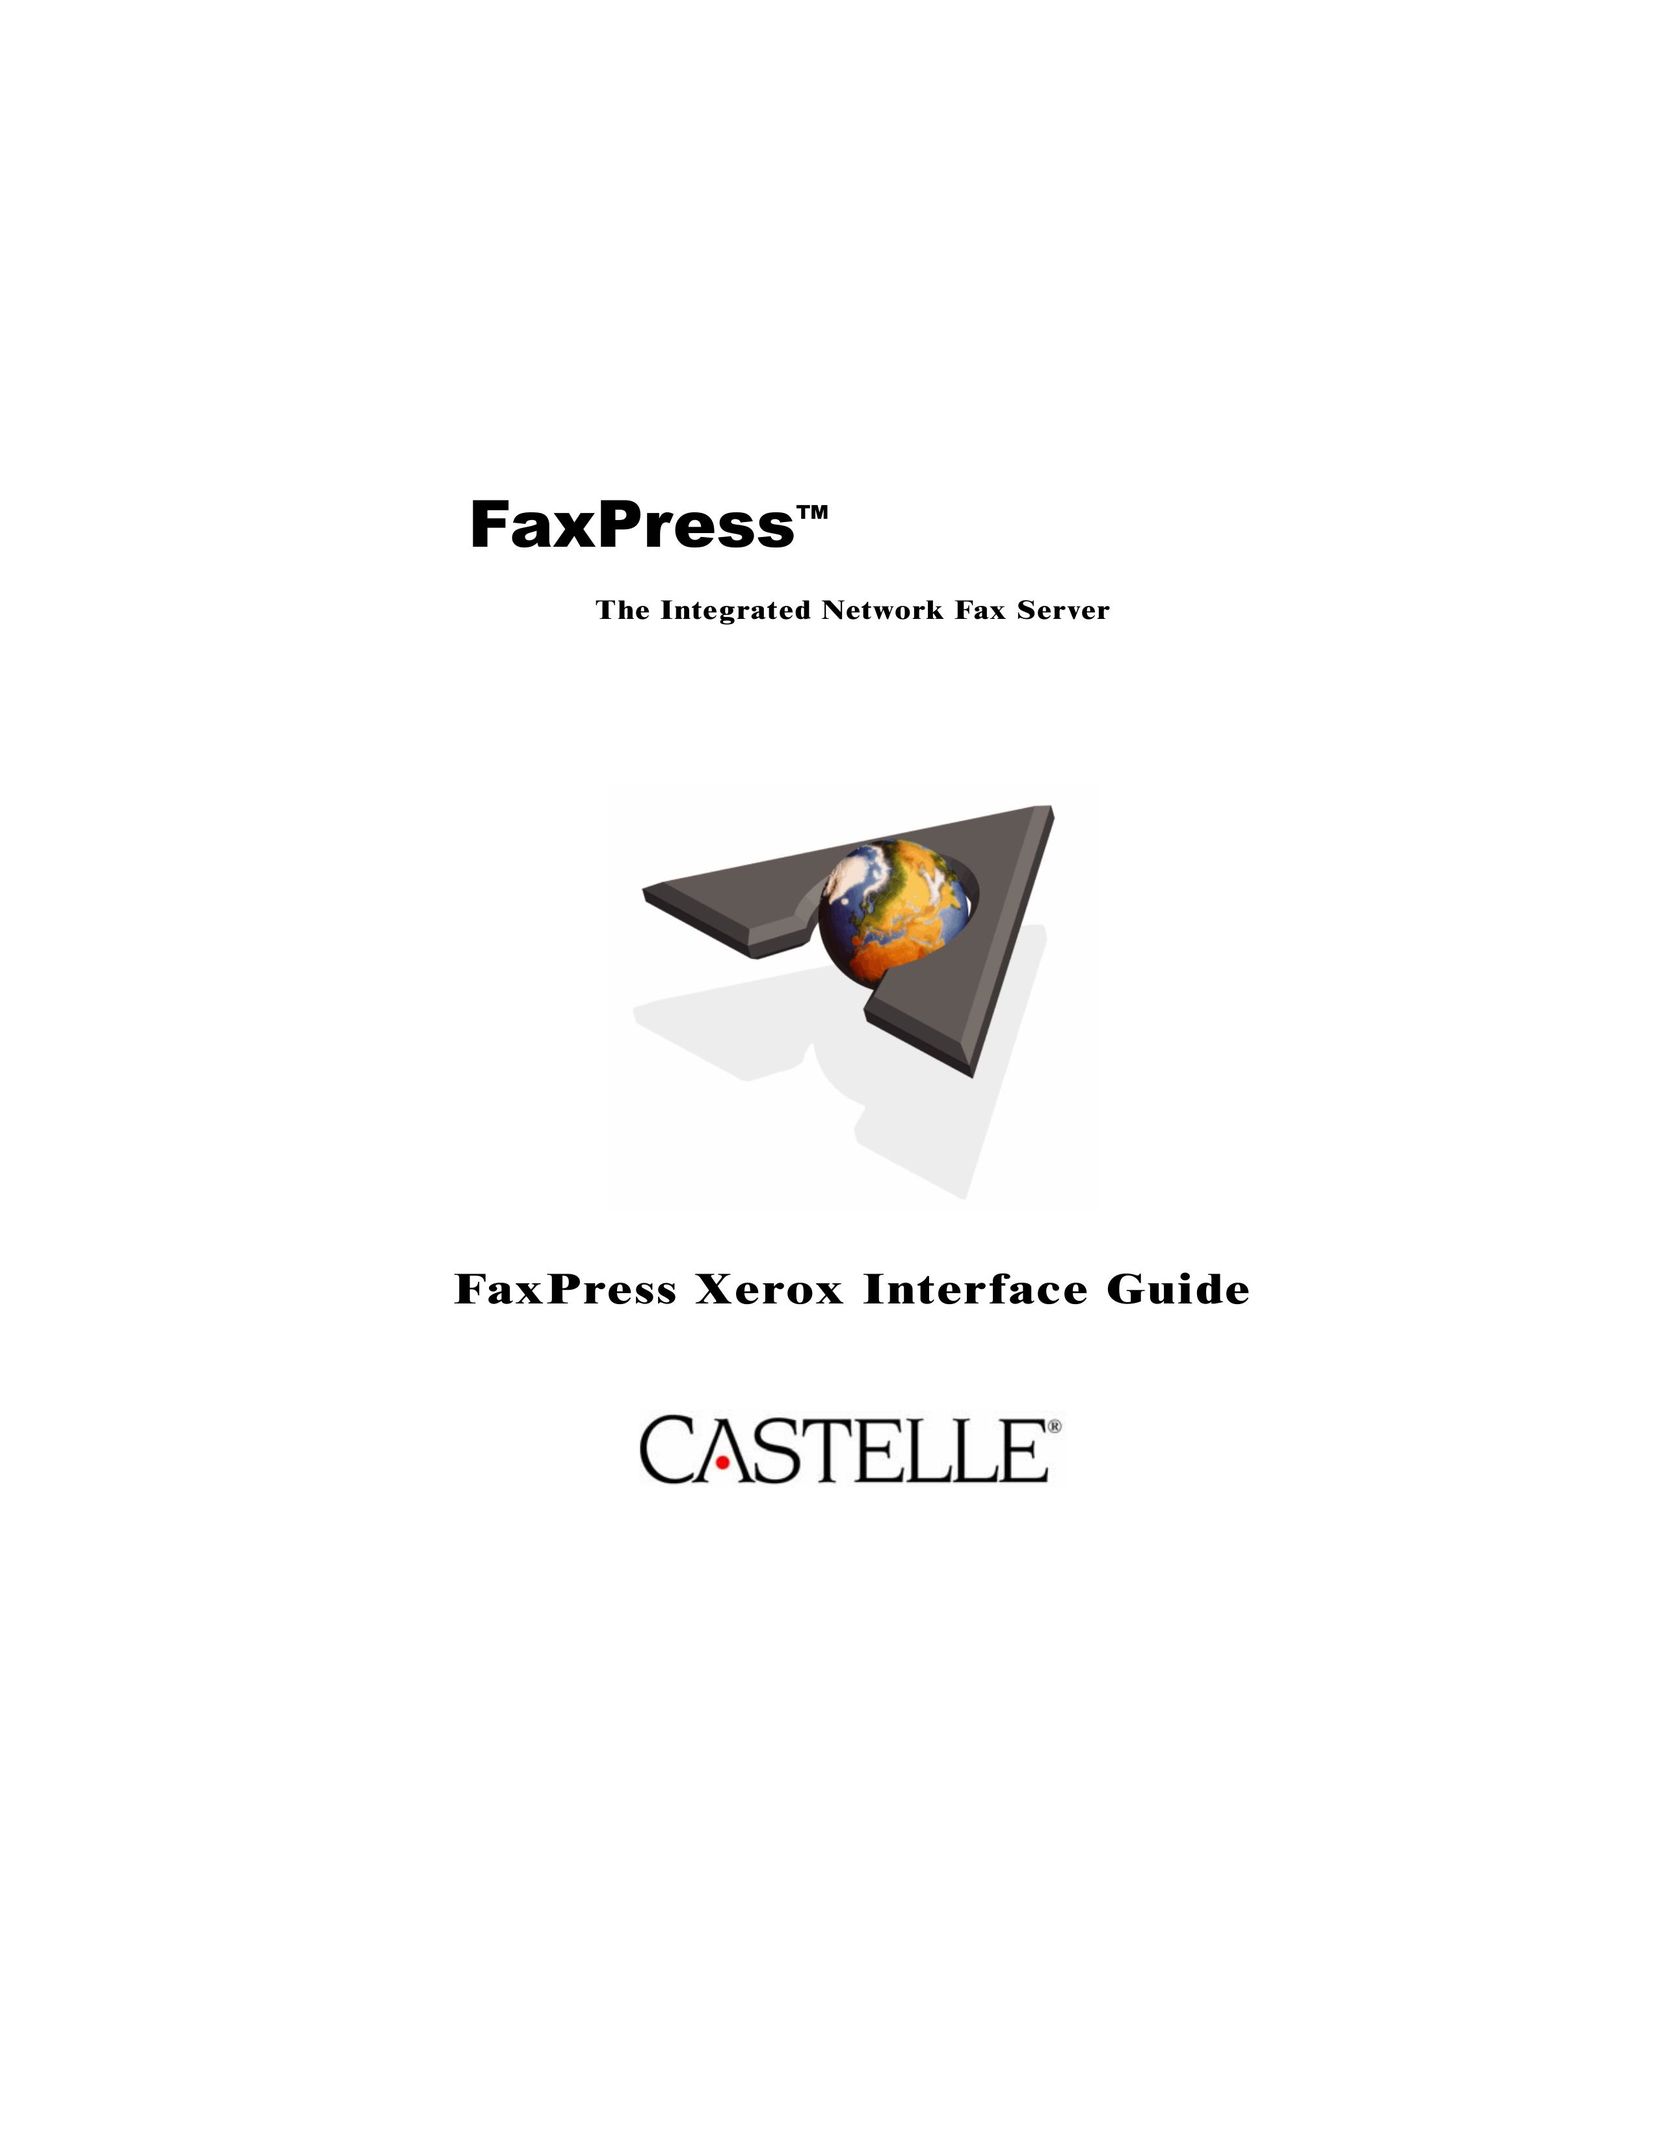 Castelle 61-1273-001 Fax Machine User Manual